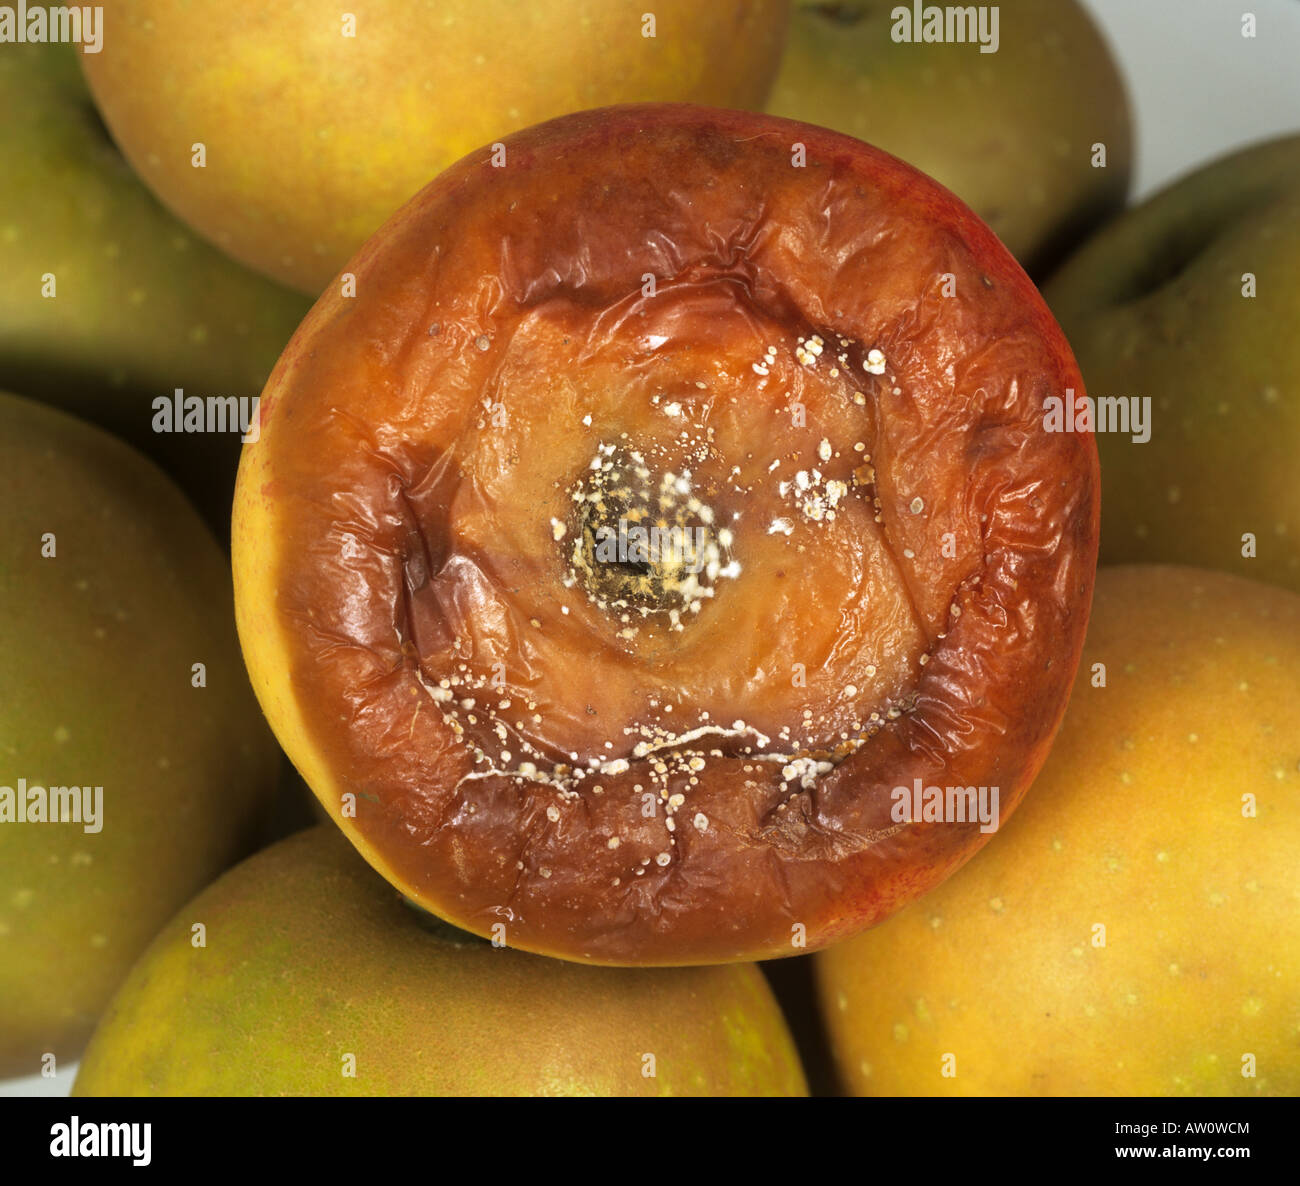 Gloeosporium rot Pezicula spp on store apple fruit Stock Photo